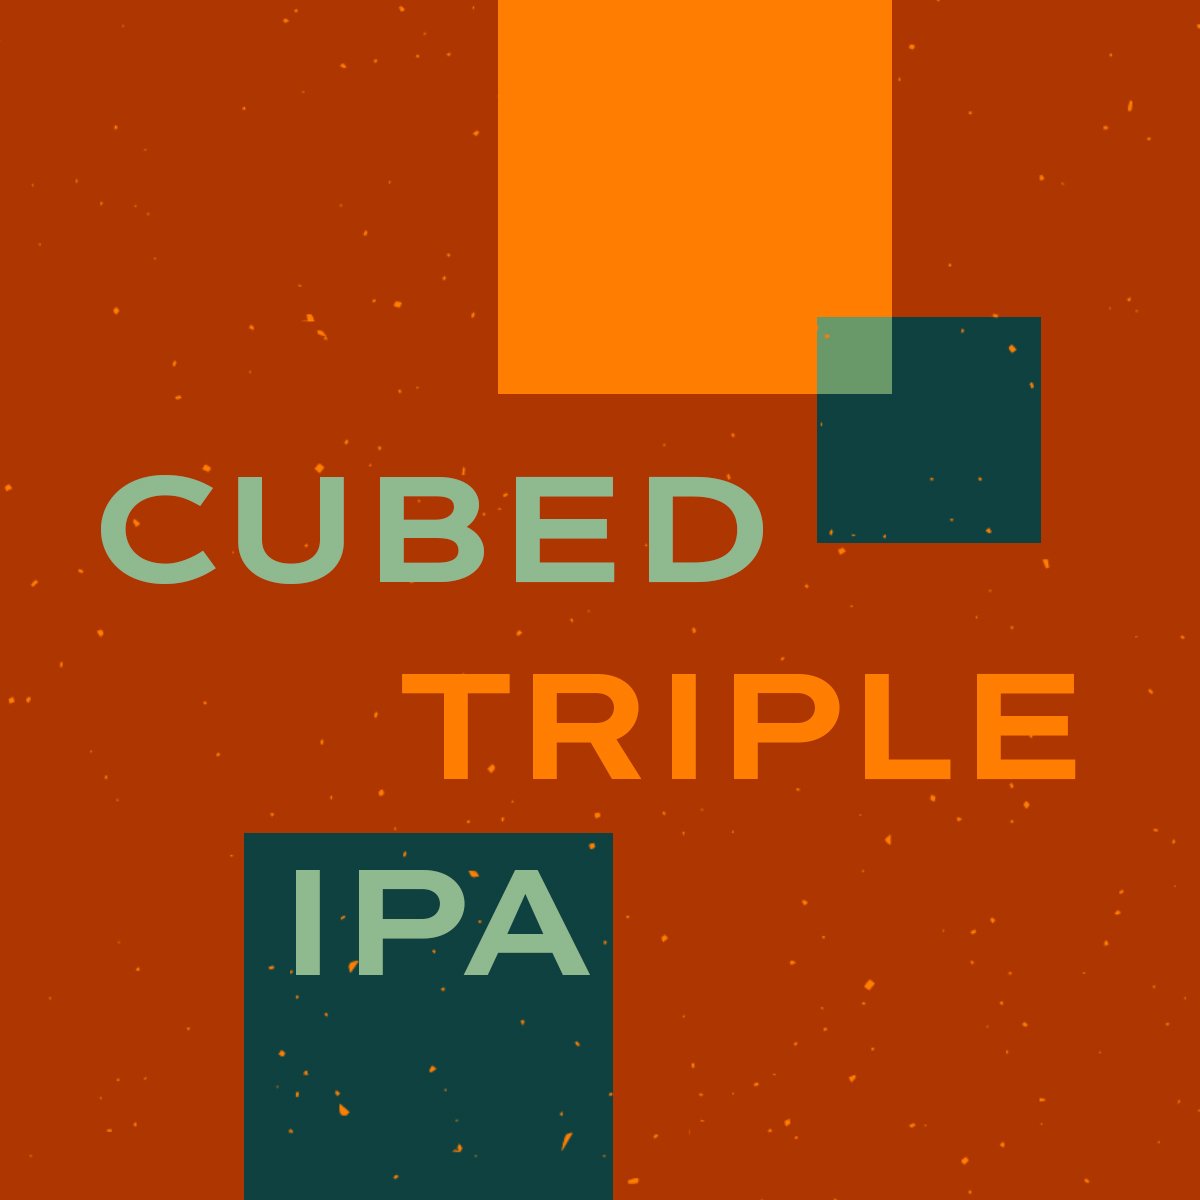 Cubed Triple IPA